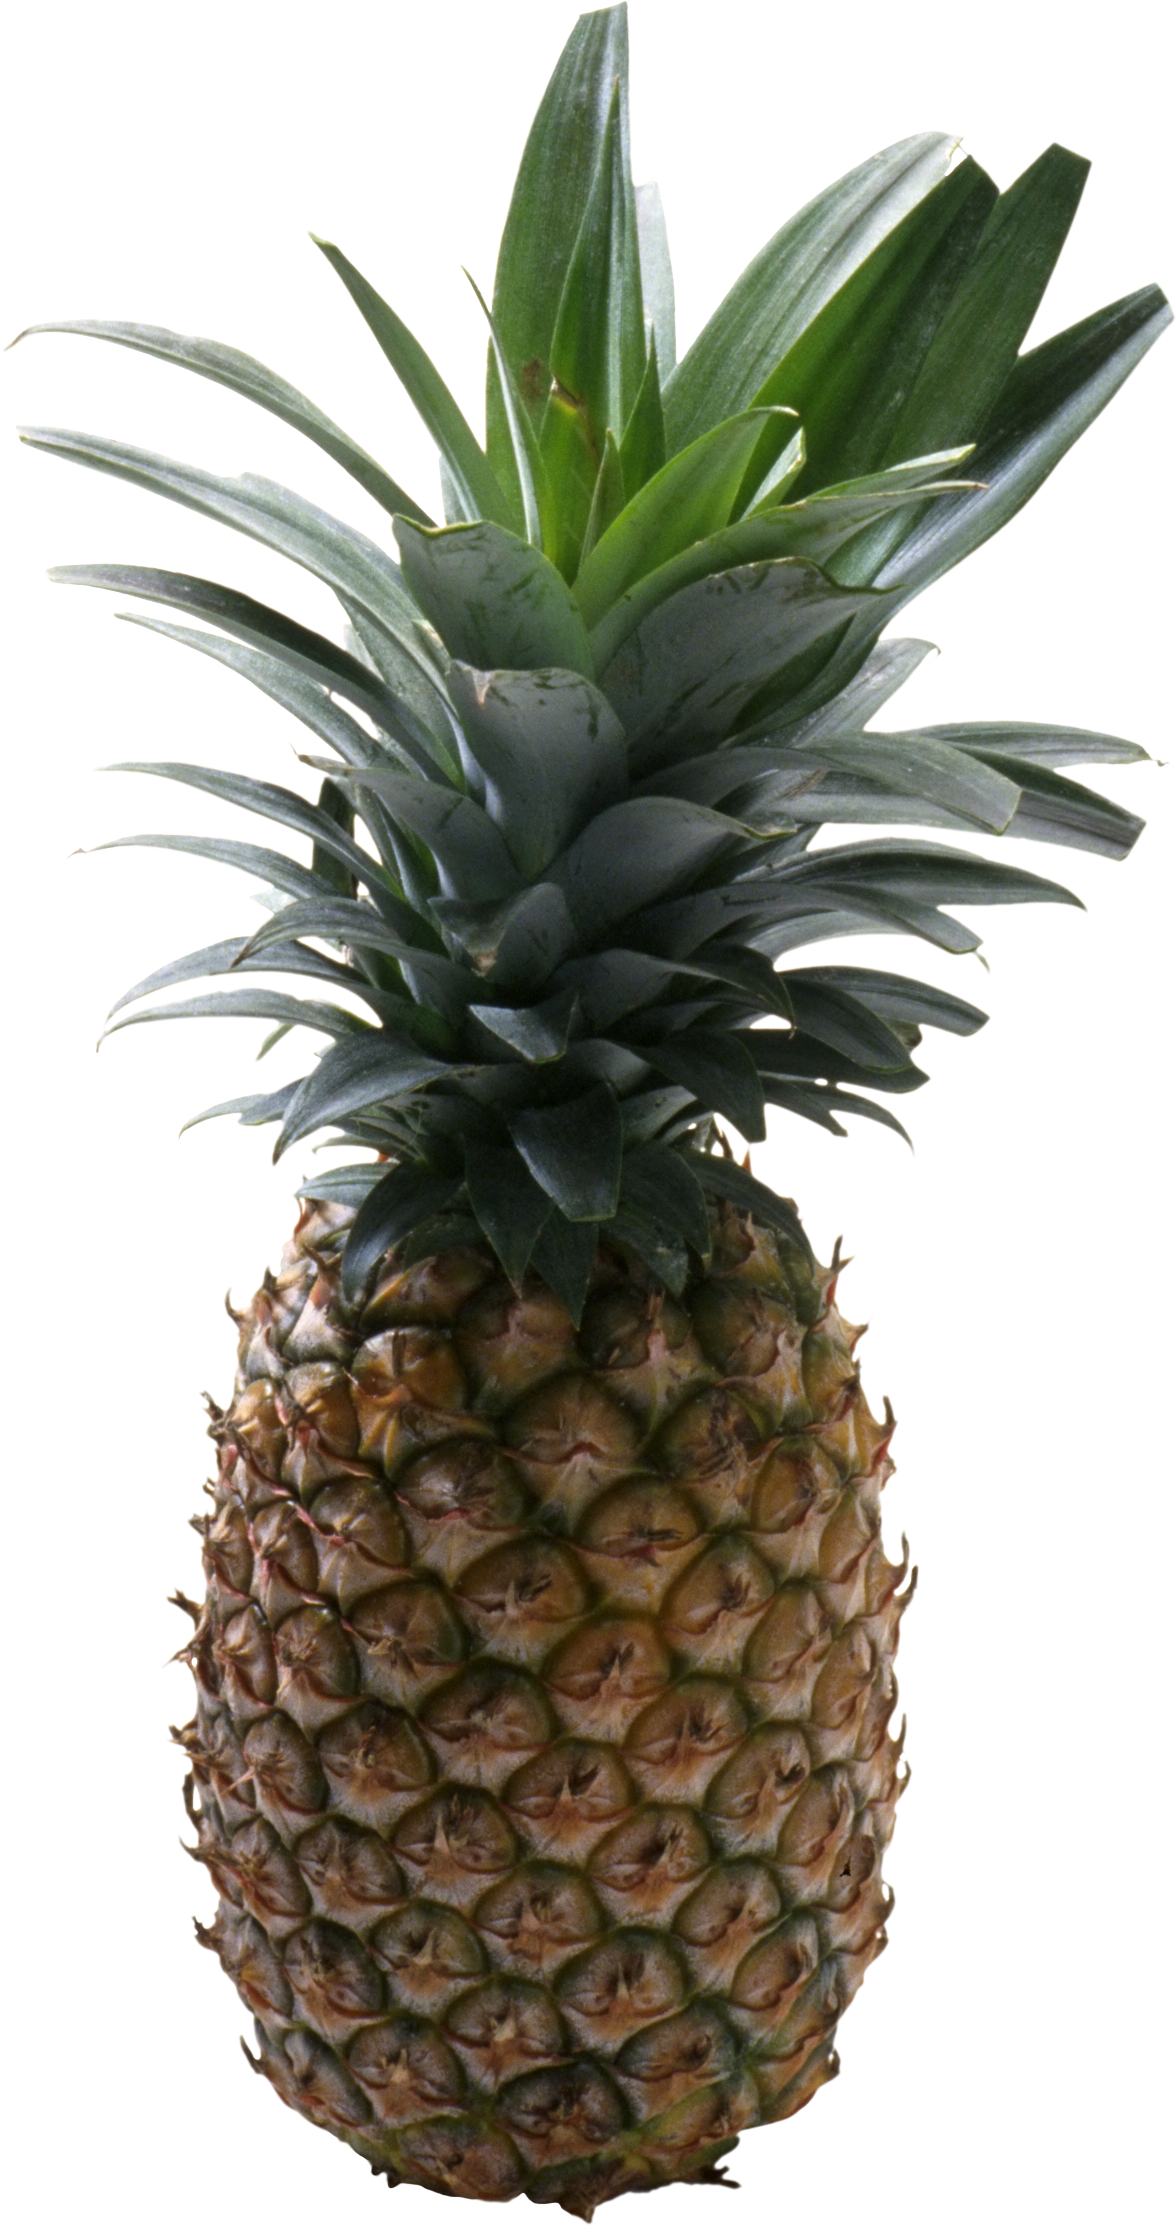 Owoc ananasa